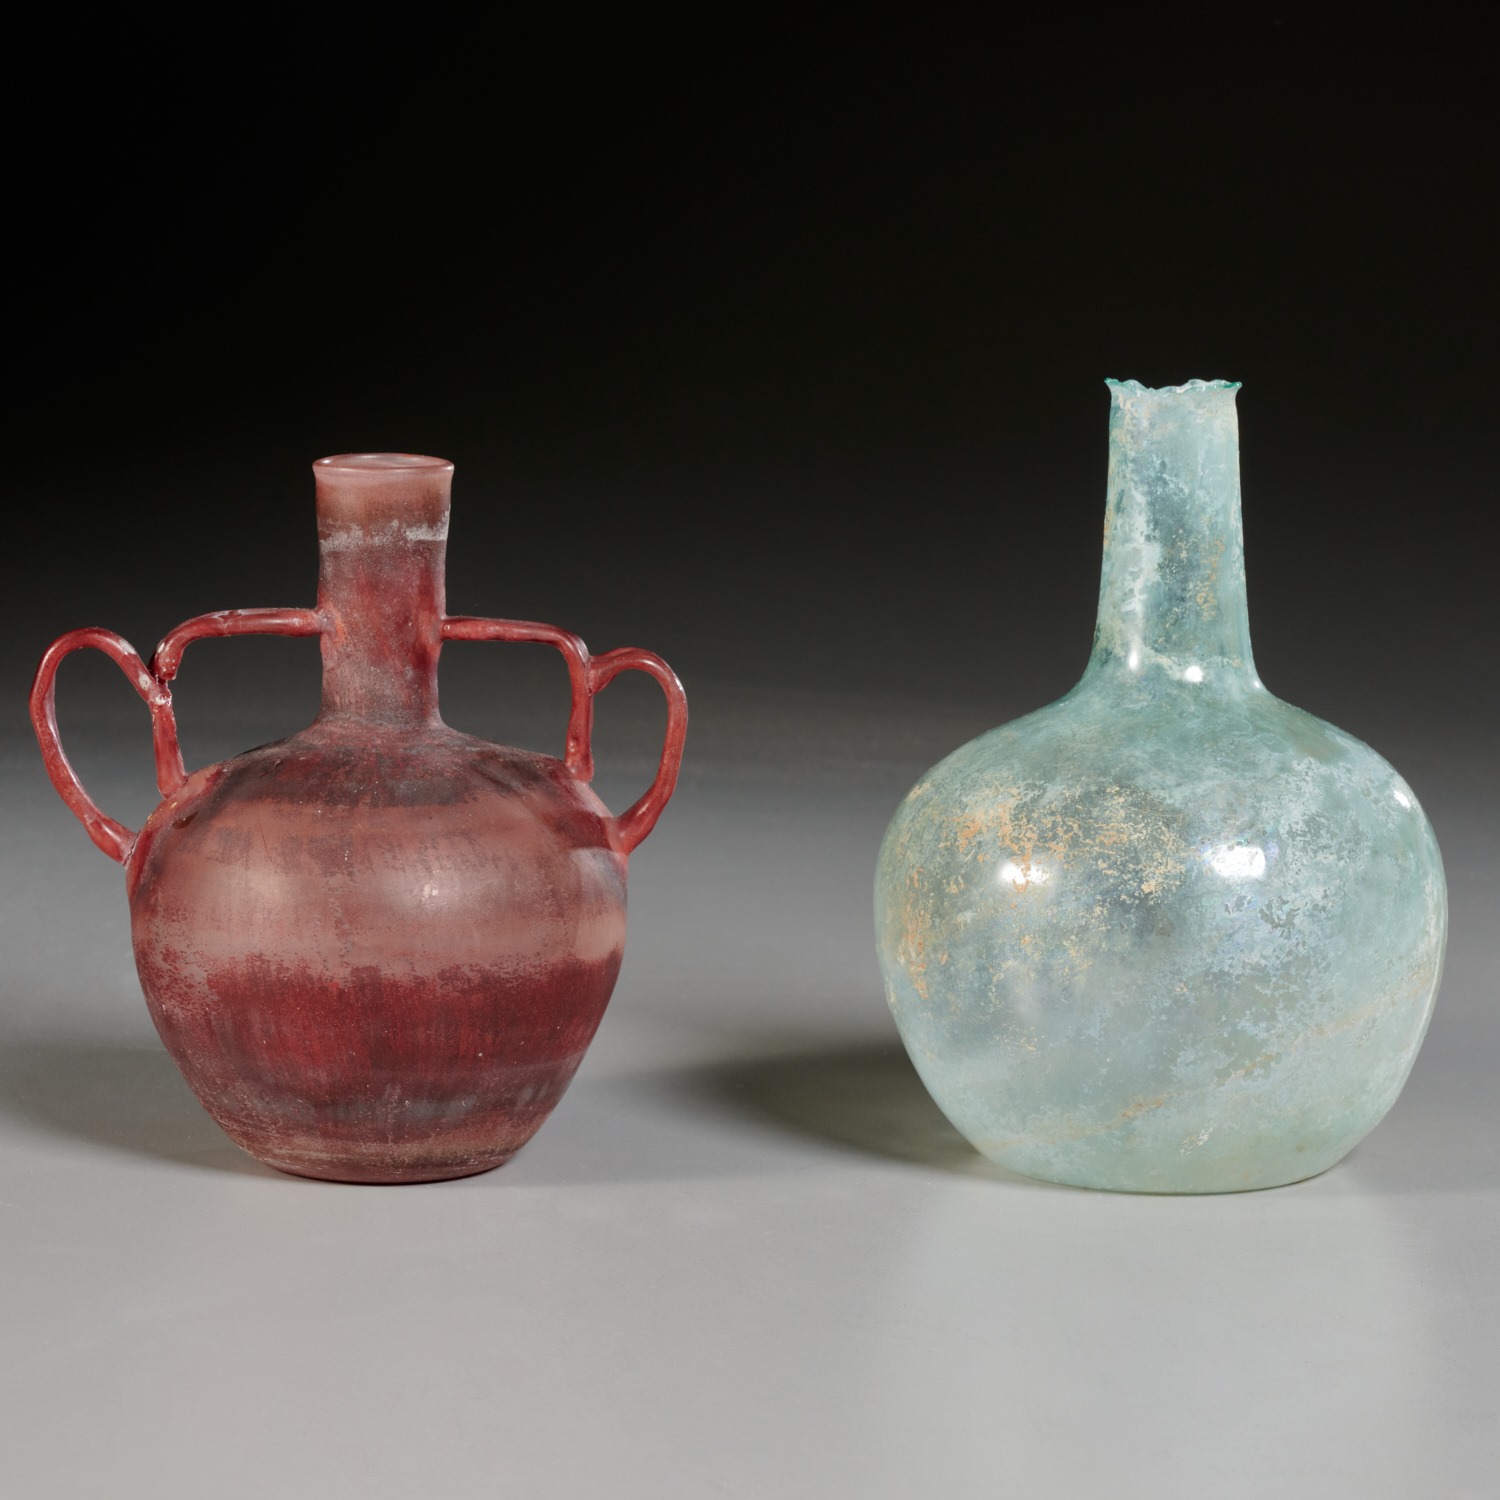  2 ANCIENT ROMAN GLASS BOTTLES 2cdff9